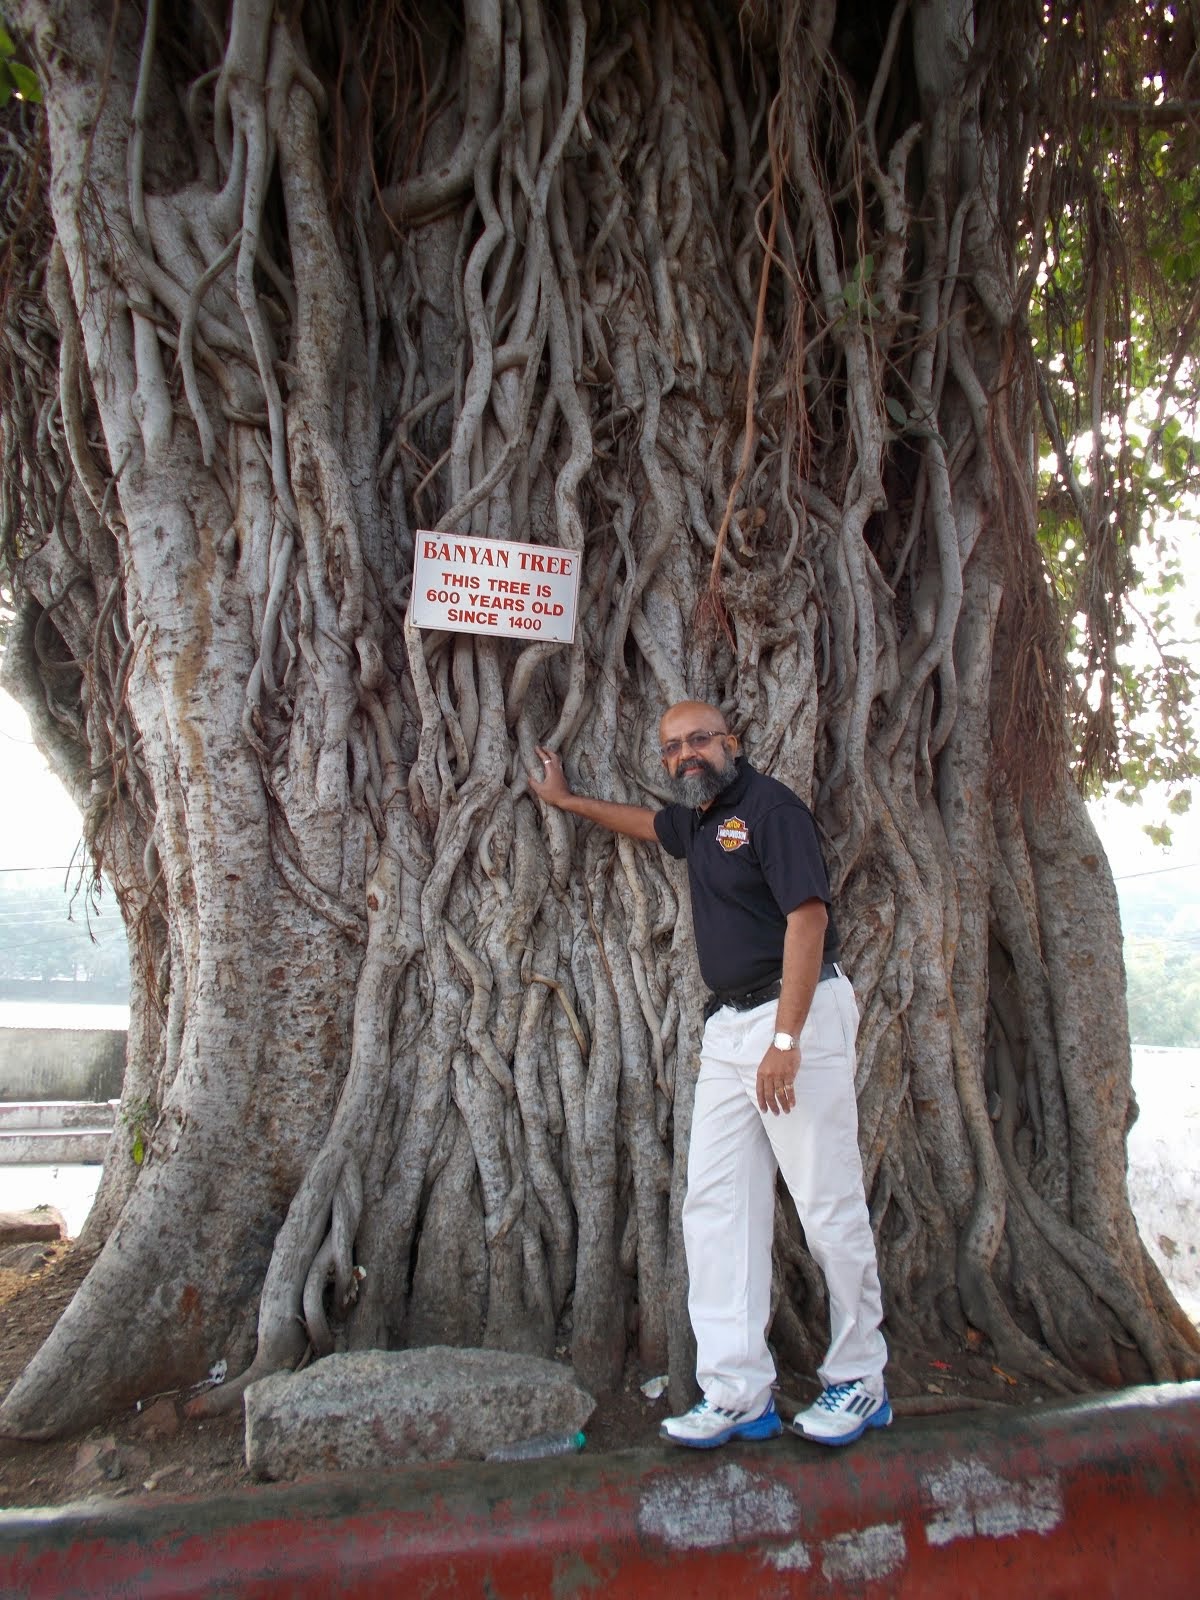 A 600 year old Banyan tree in "Panchakki Complex".